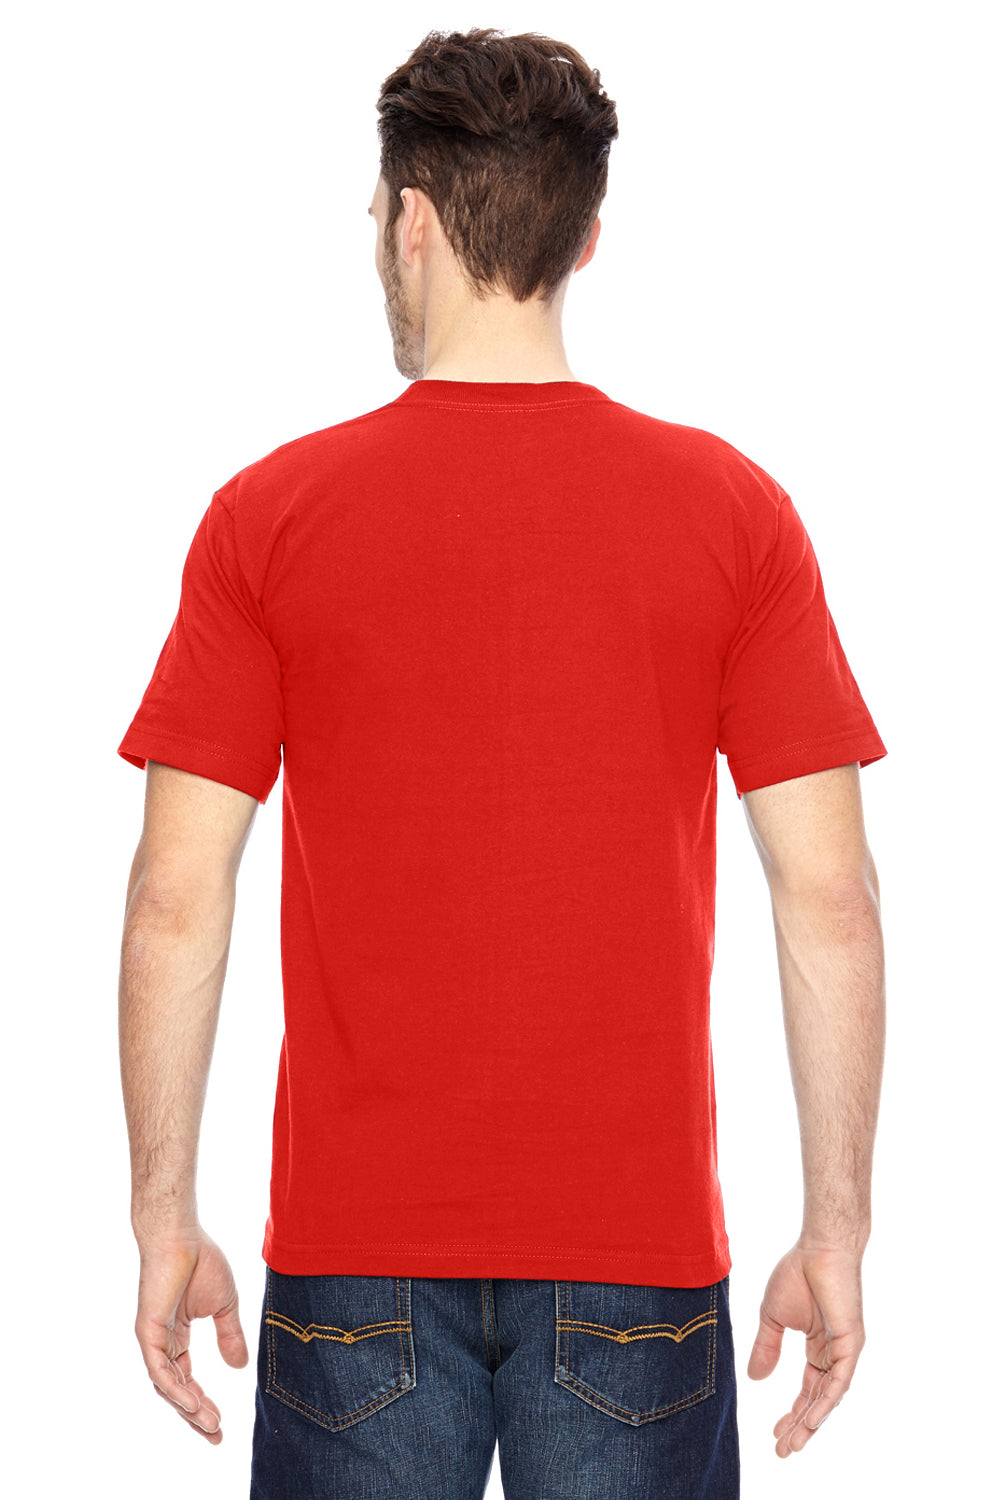 Bayside BA7100 Mens USA Made Short Sleeve Crewneck T-Shirt w/ Pocket Bright Orange Model Back